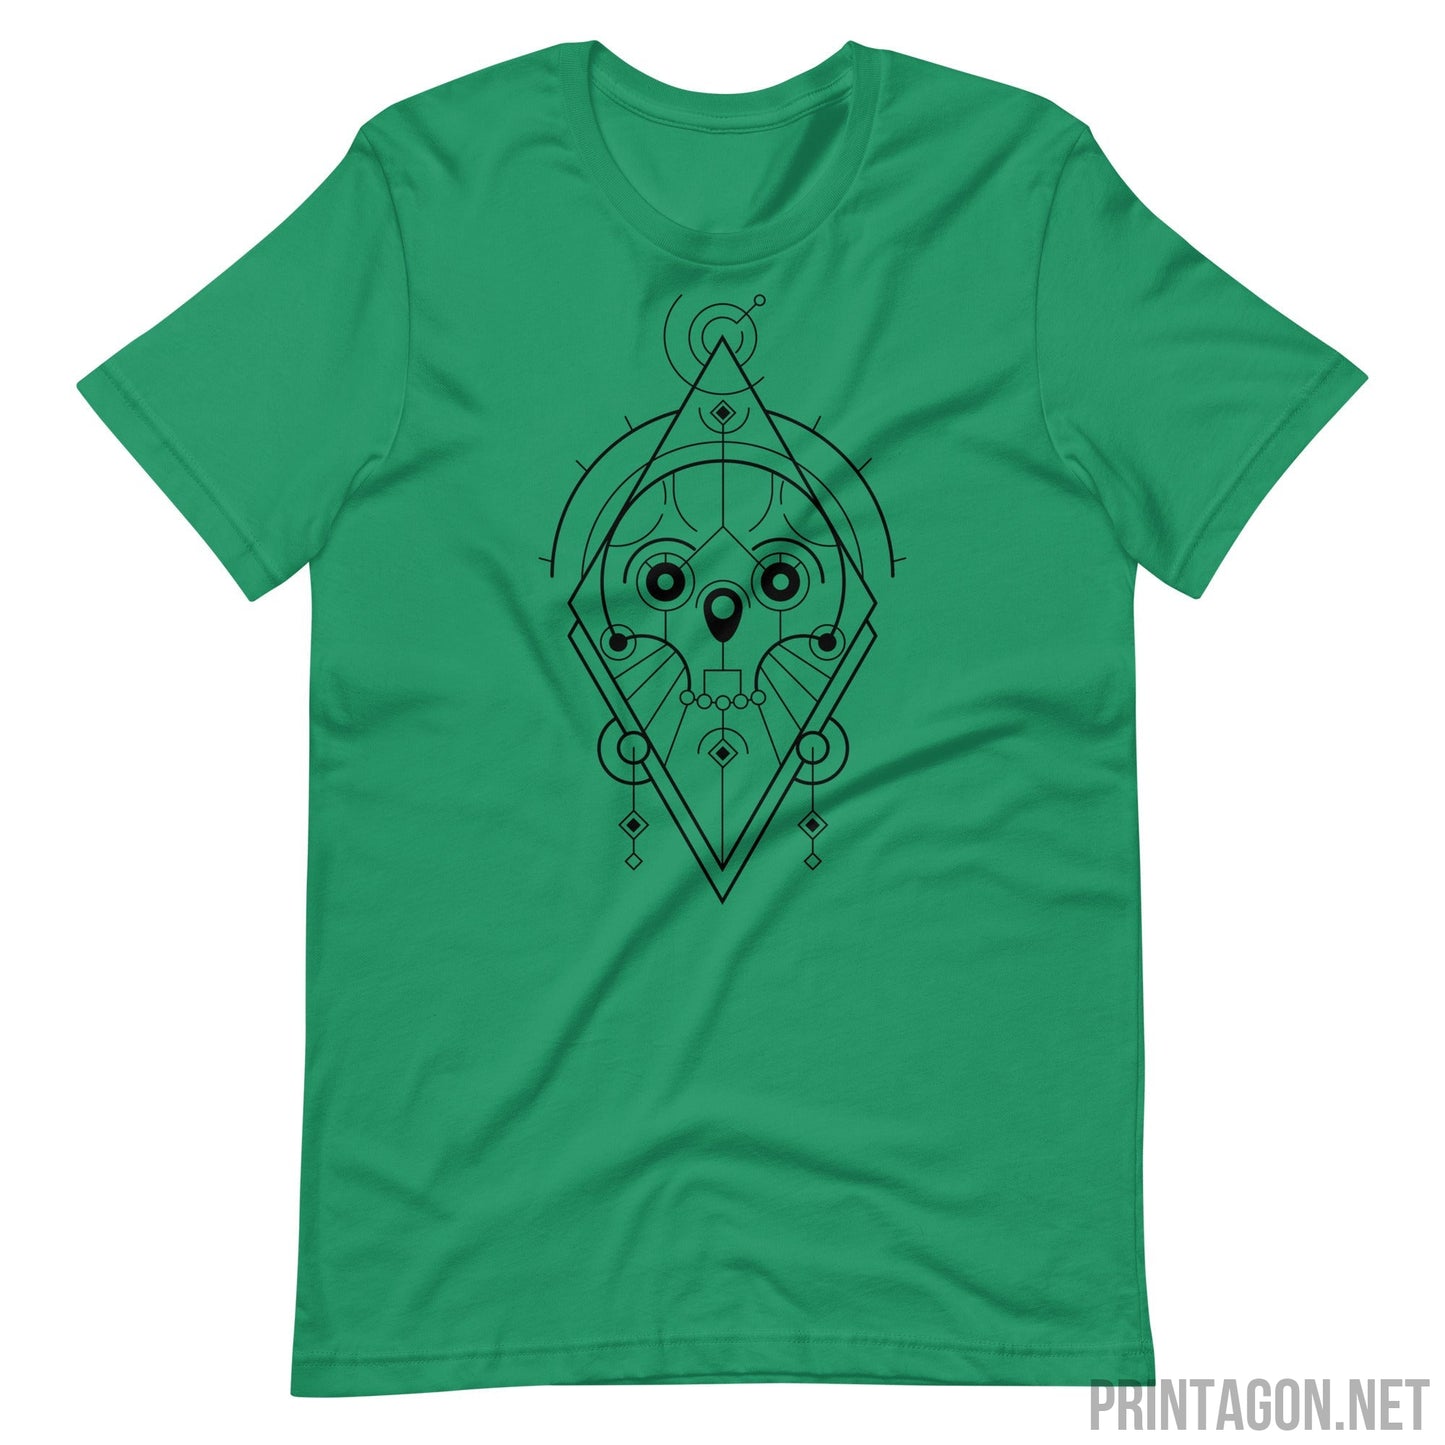 Sacred Geometric Skull - Unisex T-shirt - Kelly / XS Printagon